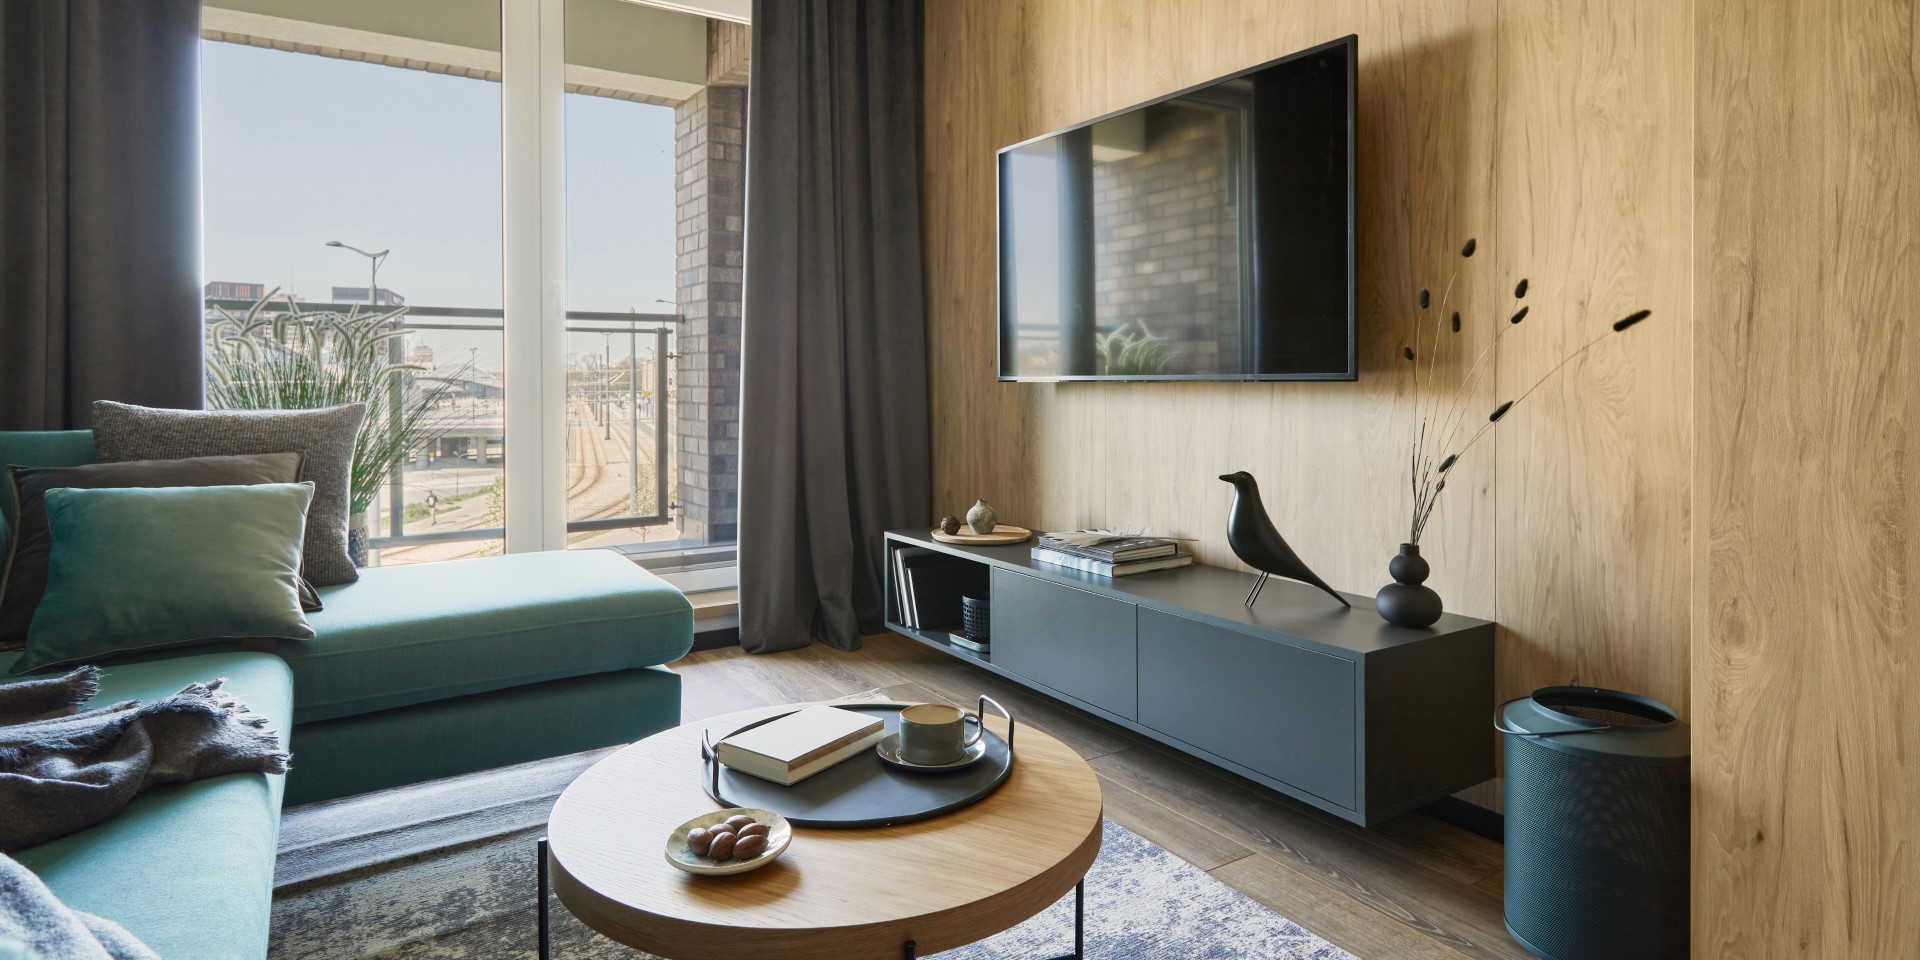 Creative Composition Of Modern Living Room Interio 2022 12 07 04 28 10 Utc